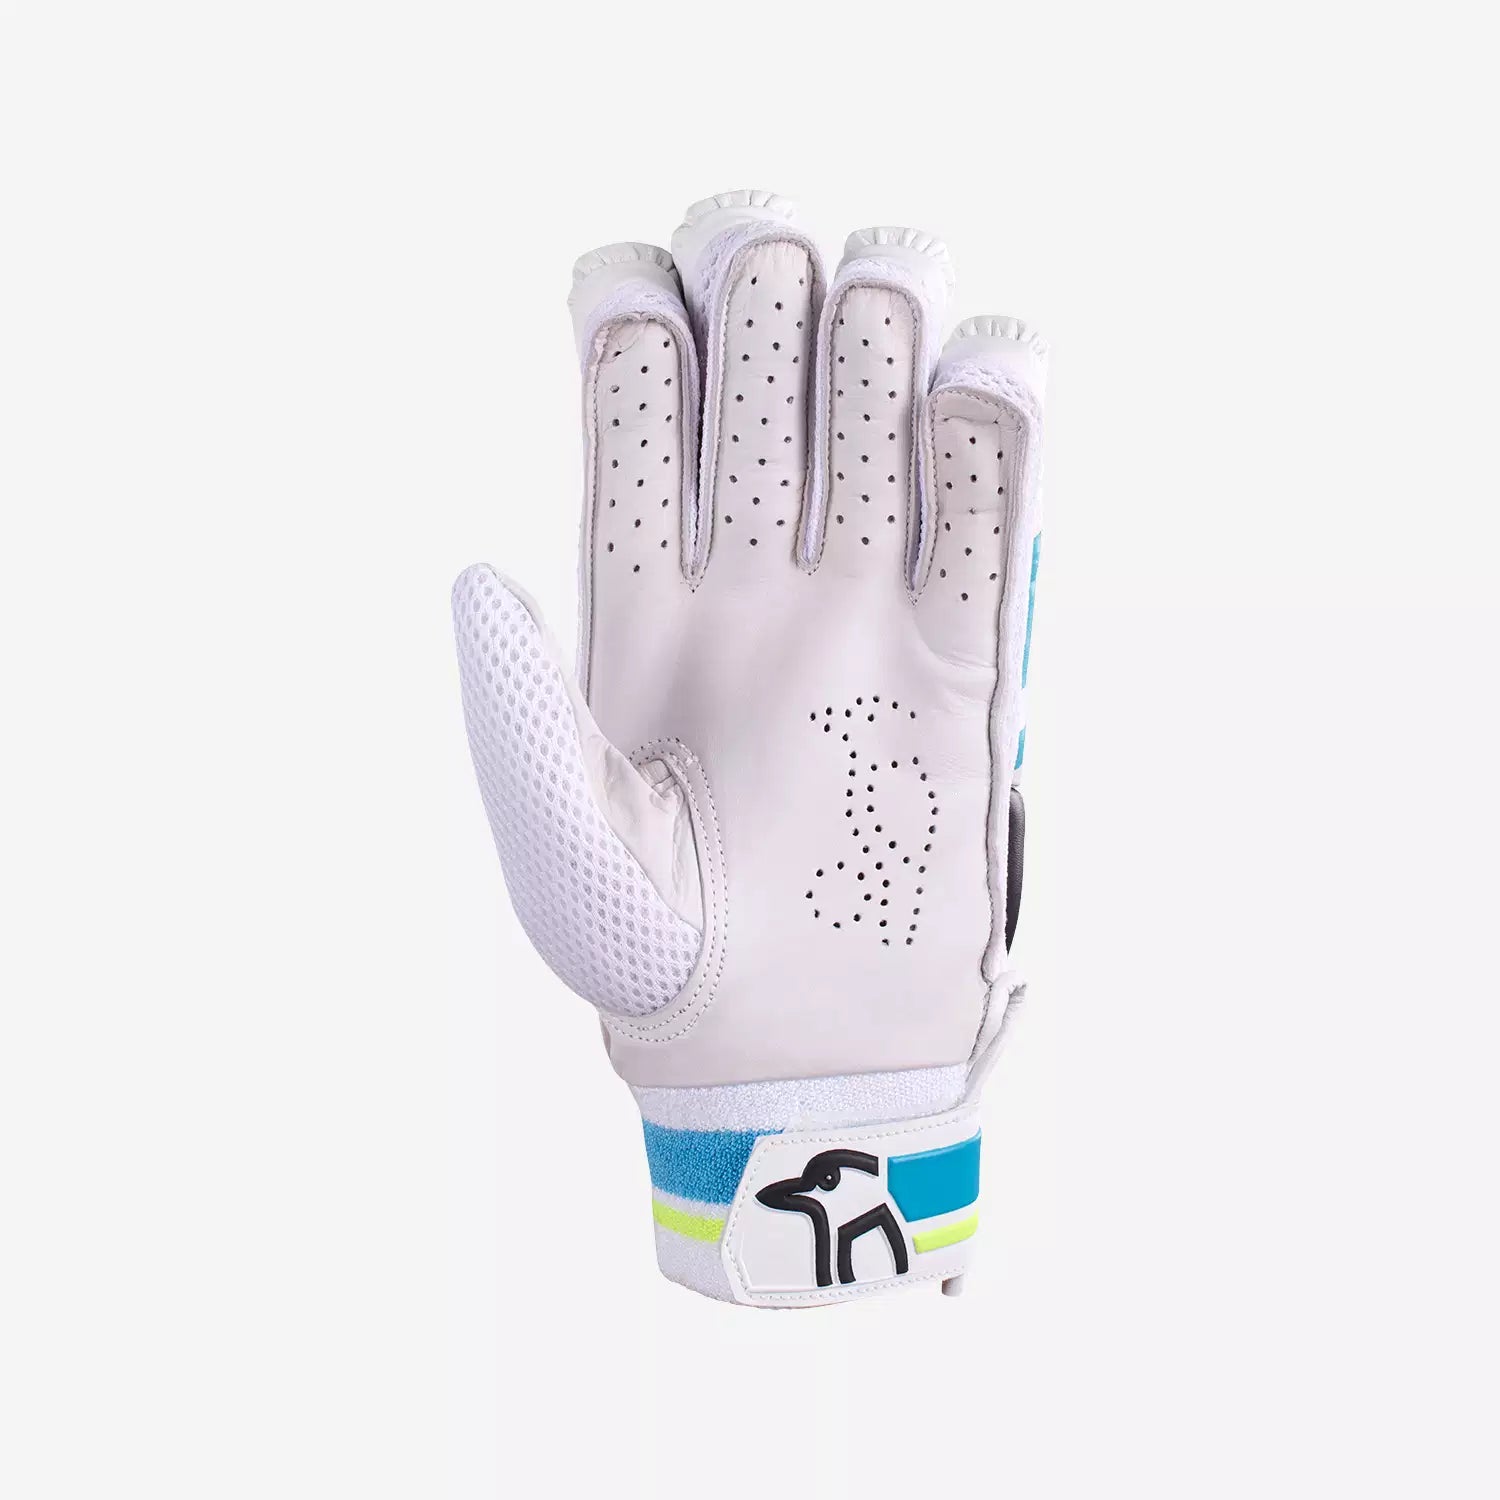 Kookaburra Rapid 4.1 Batting Gloves